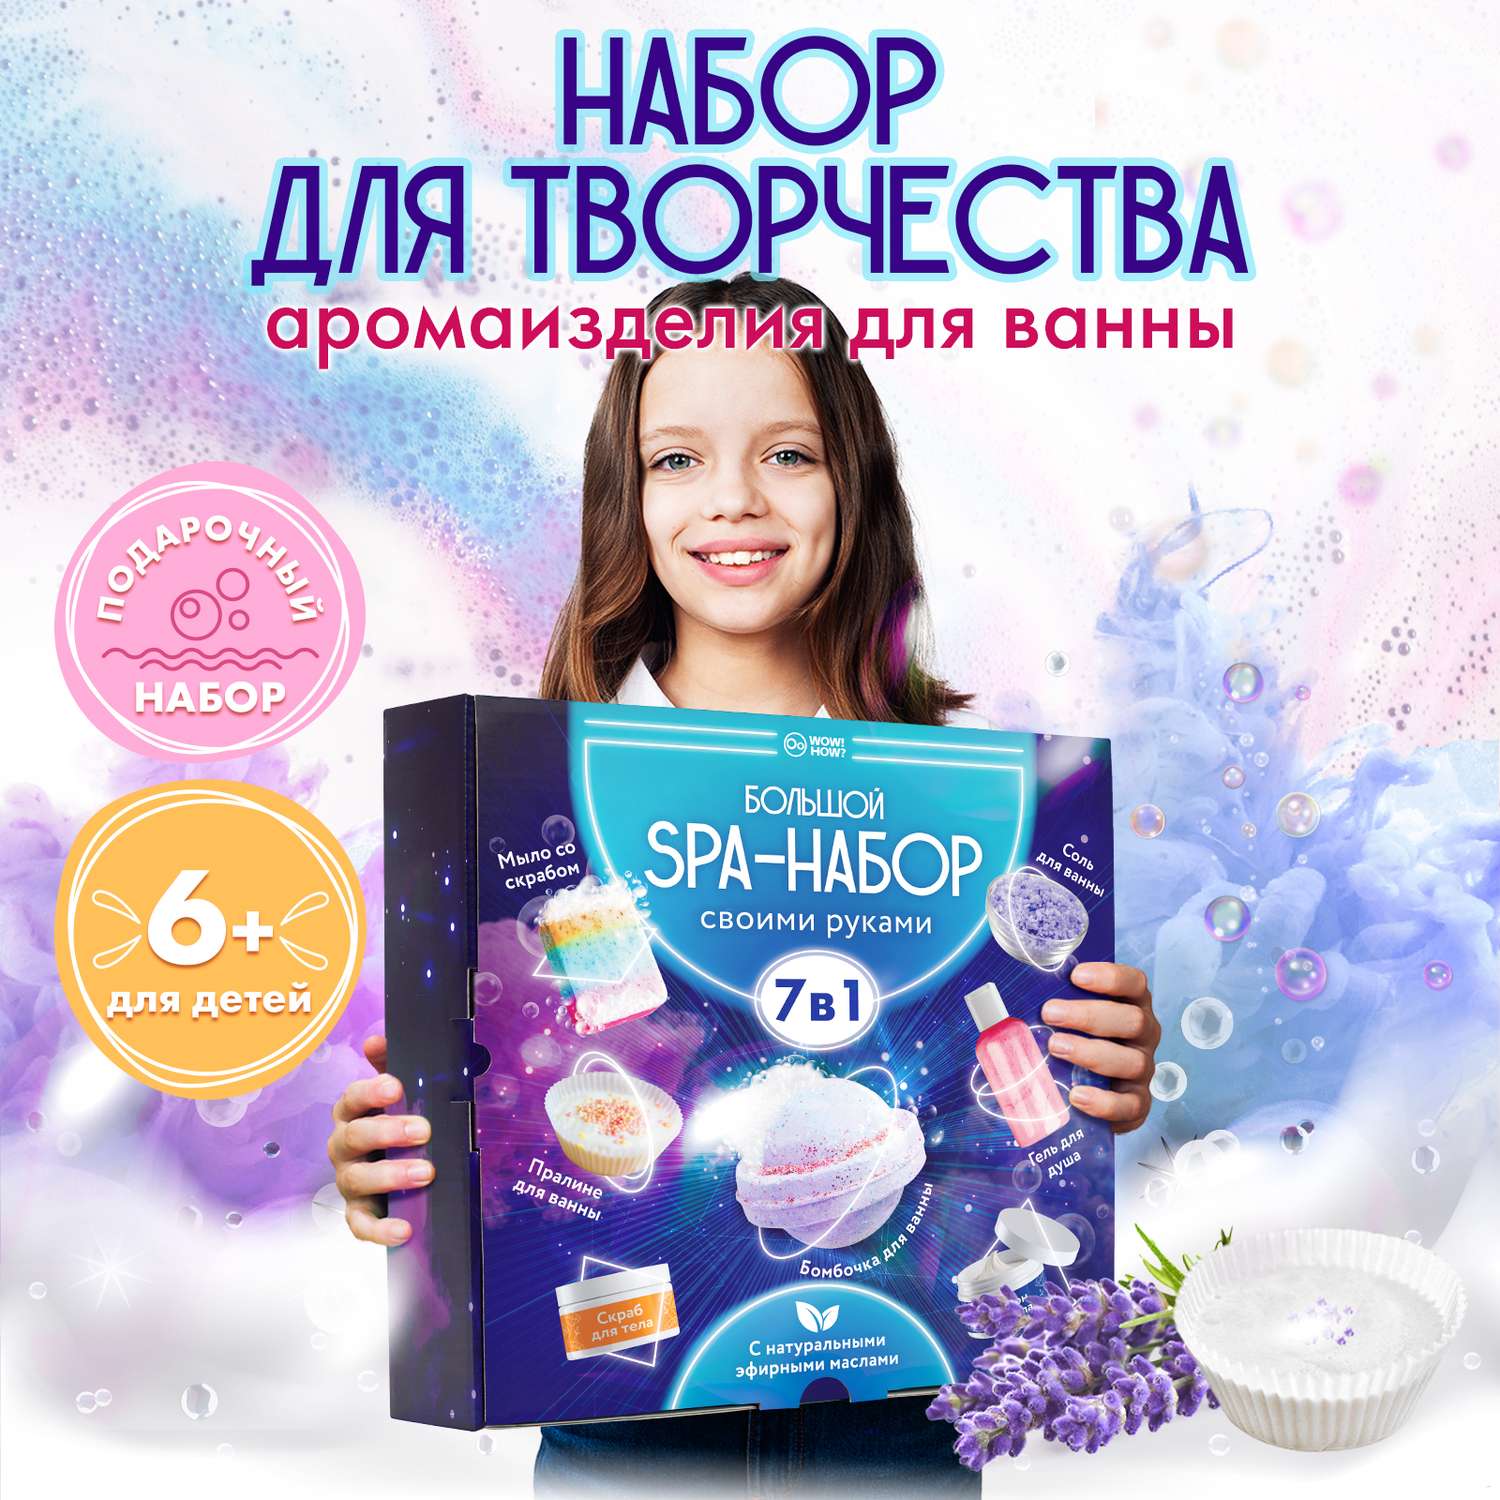 Крупнейший в Сибири хобби-маркет Hand mad: товары для творчества и рукоделия